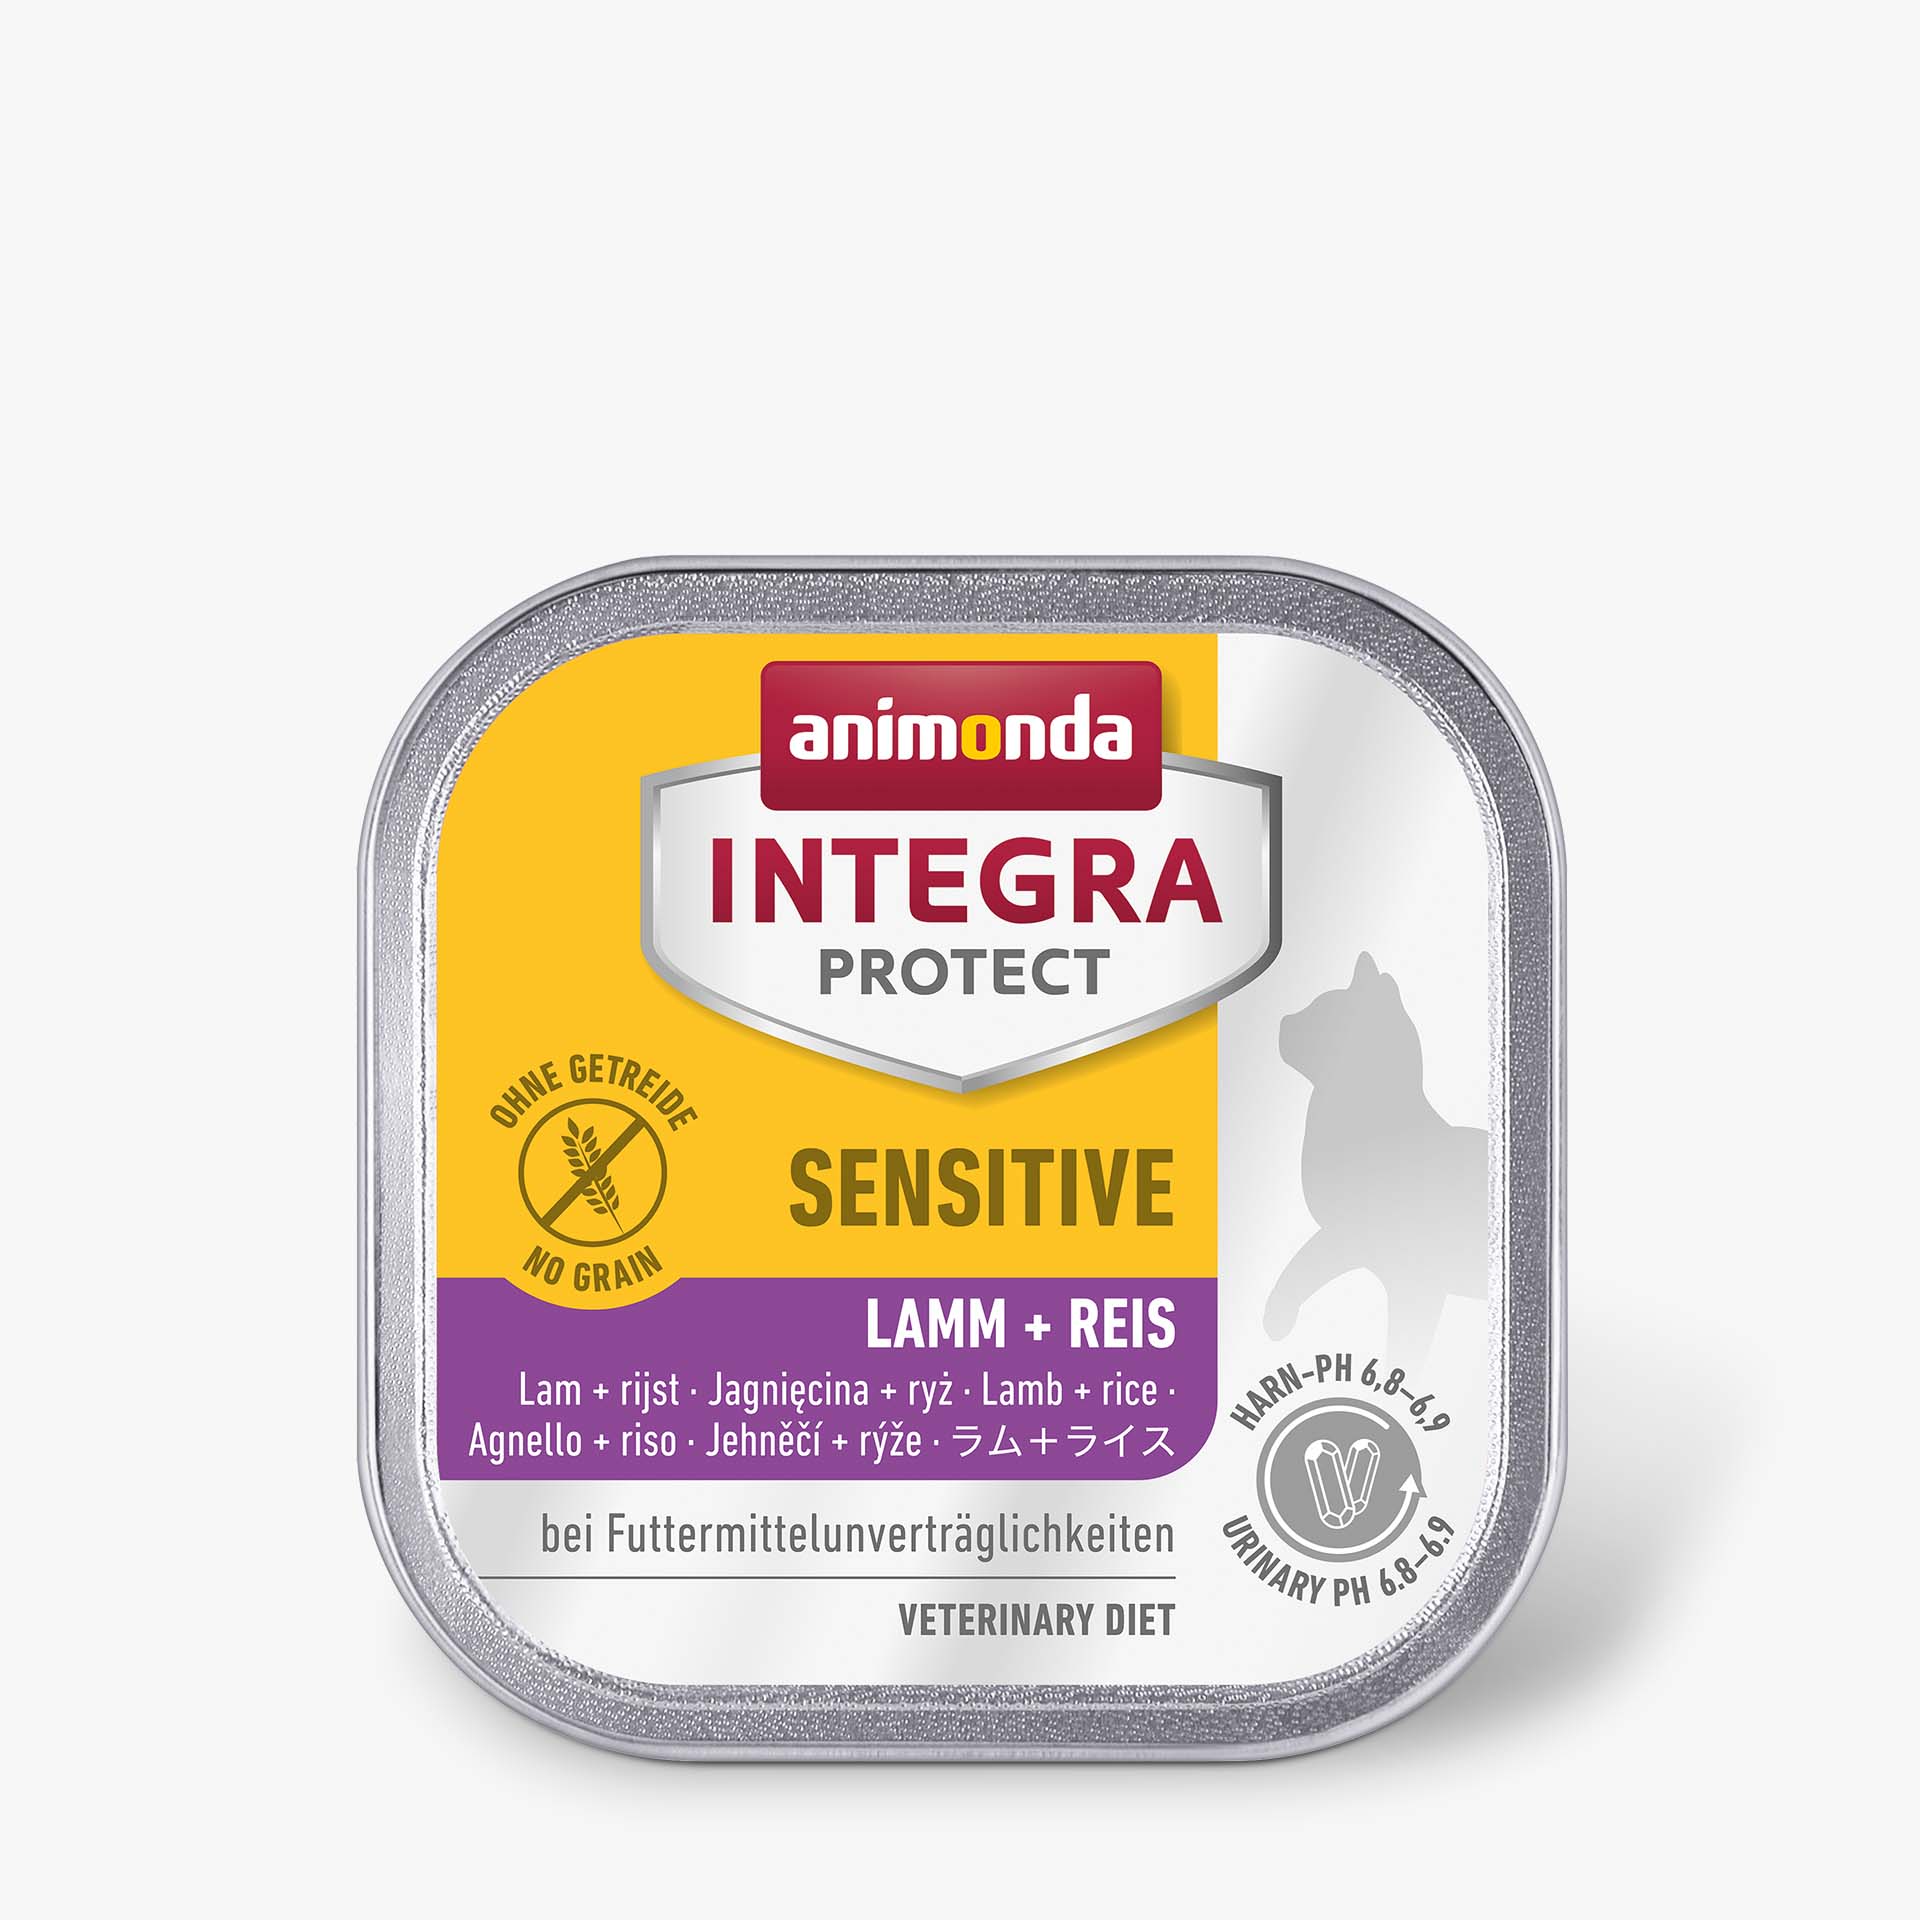 INTEGRA PROTECT Lamb + rice Sensitive